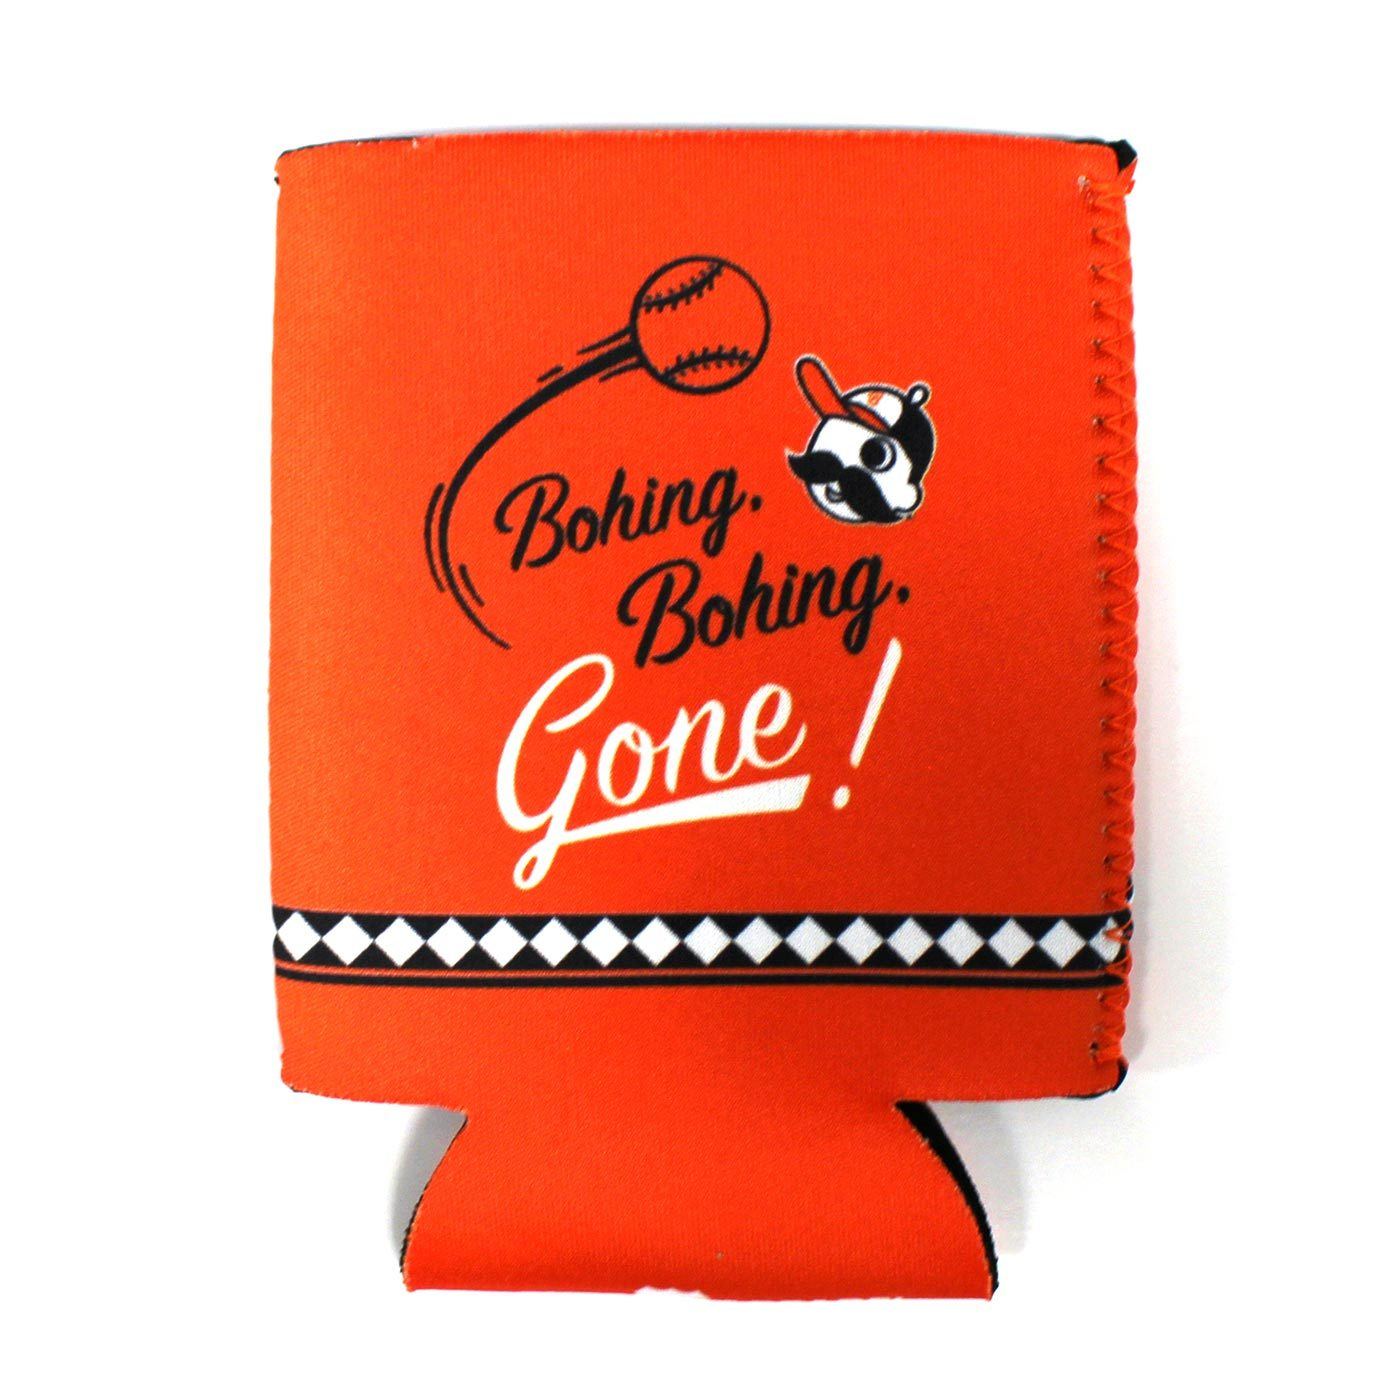 Bohing, Bohing, Gone! National Bohemian Baseball (Orange) / Can Cooler - Route One Apparel